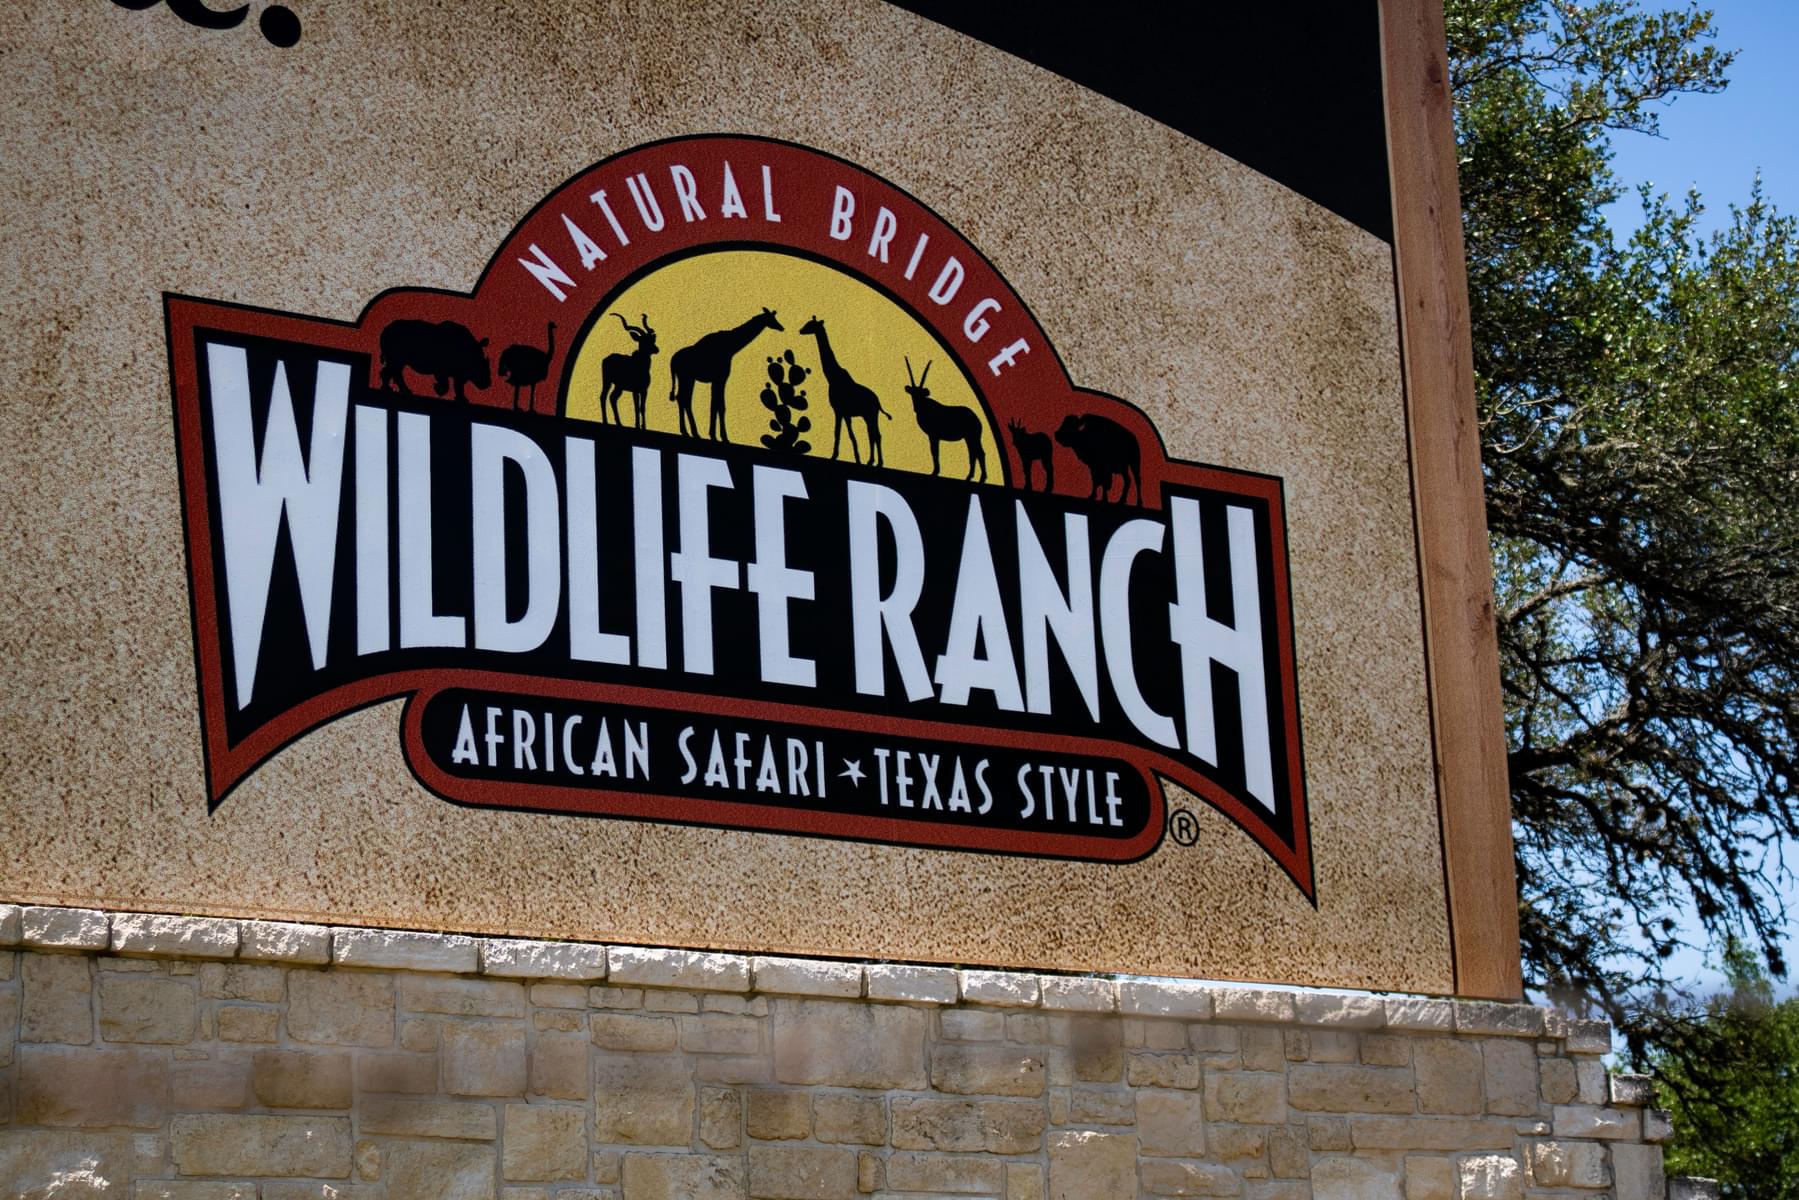 Visit Natural Bridge Wildlife Ranch